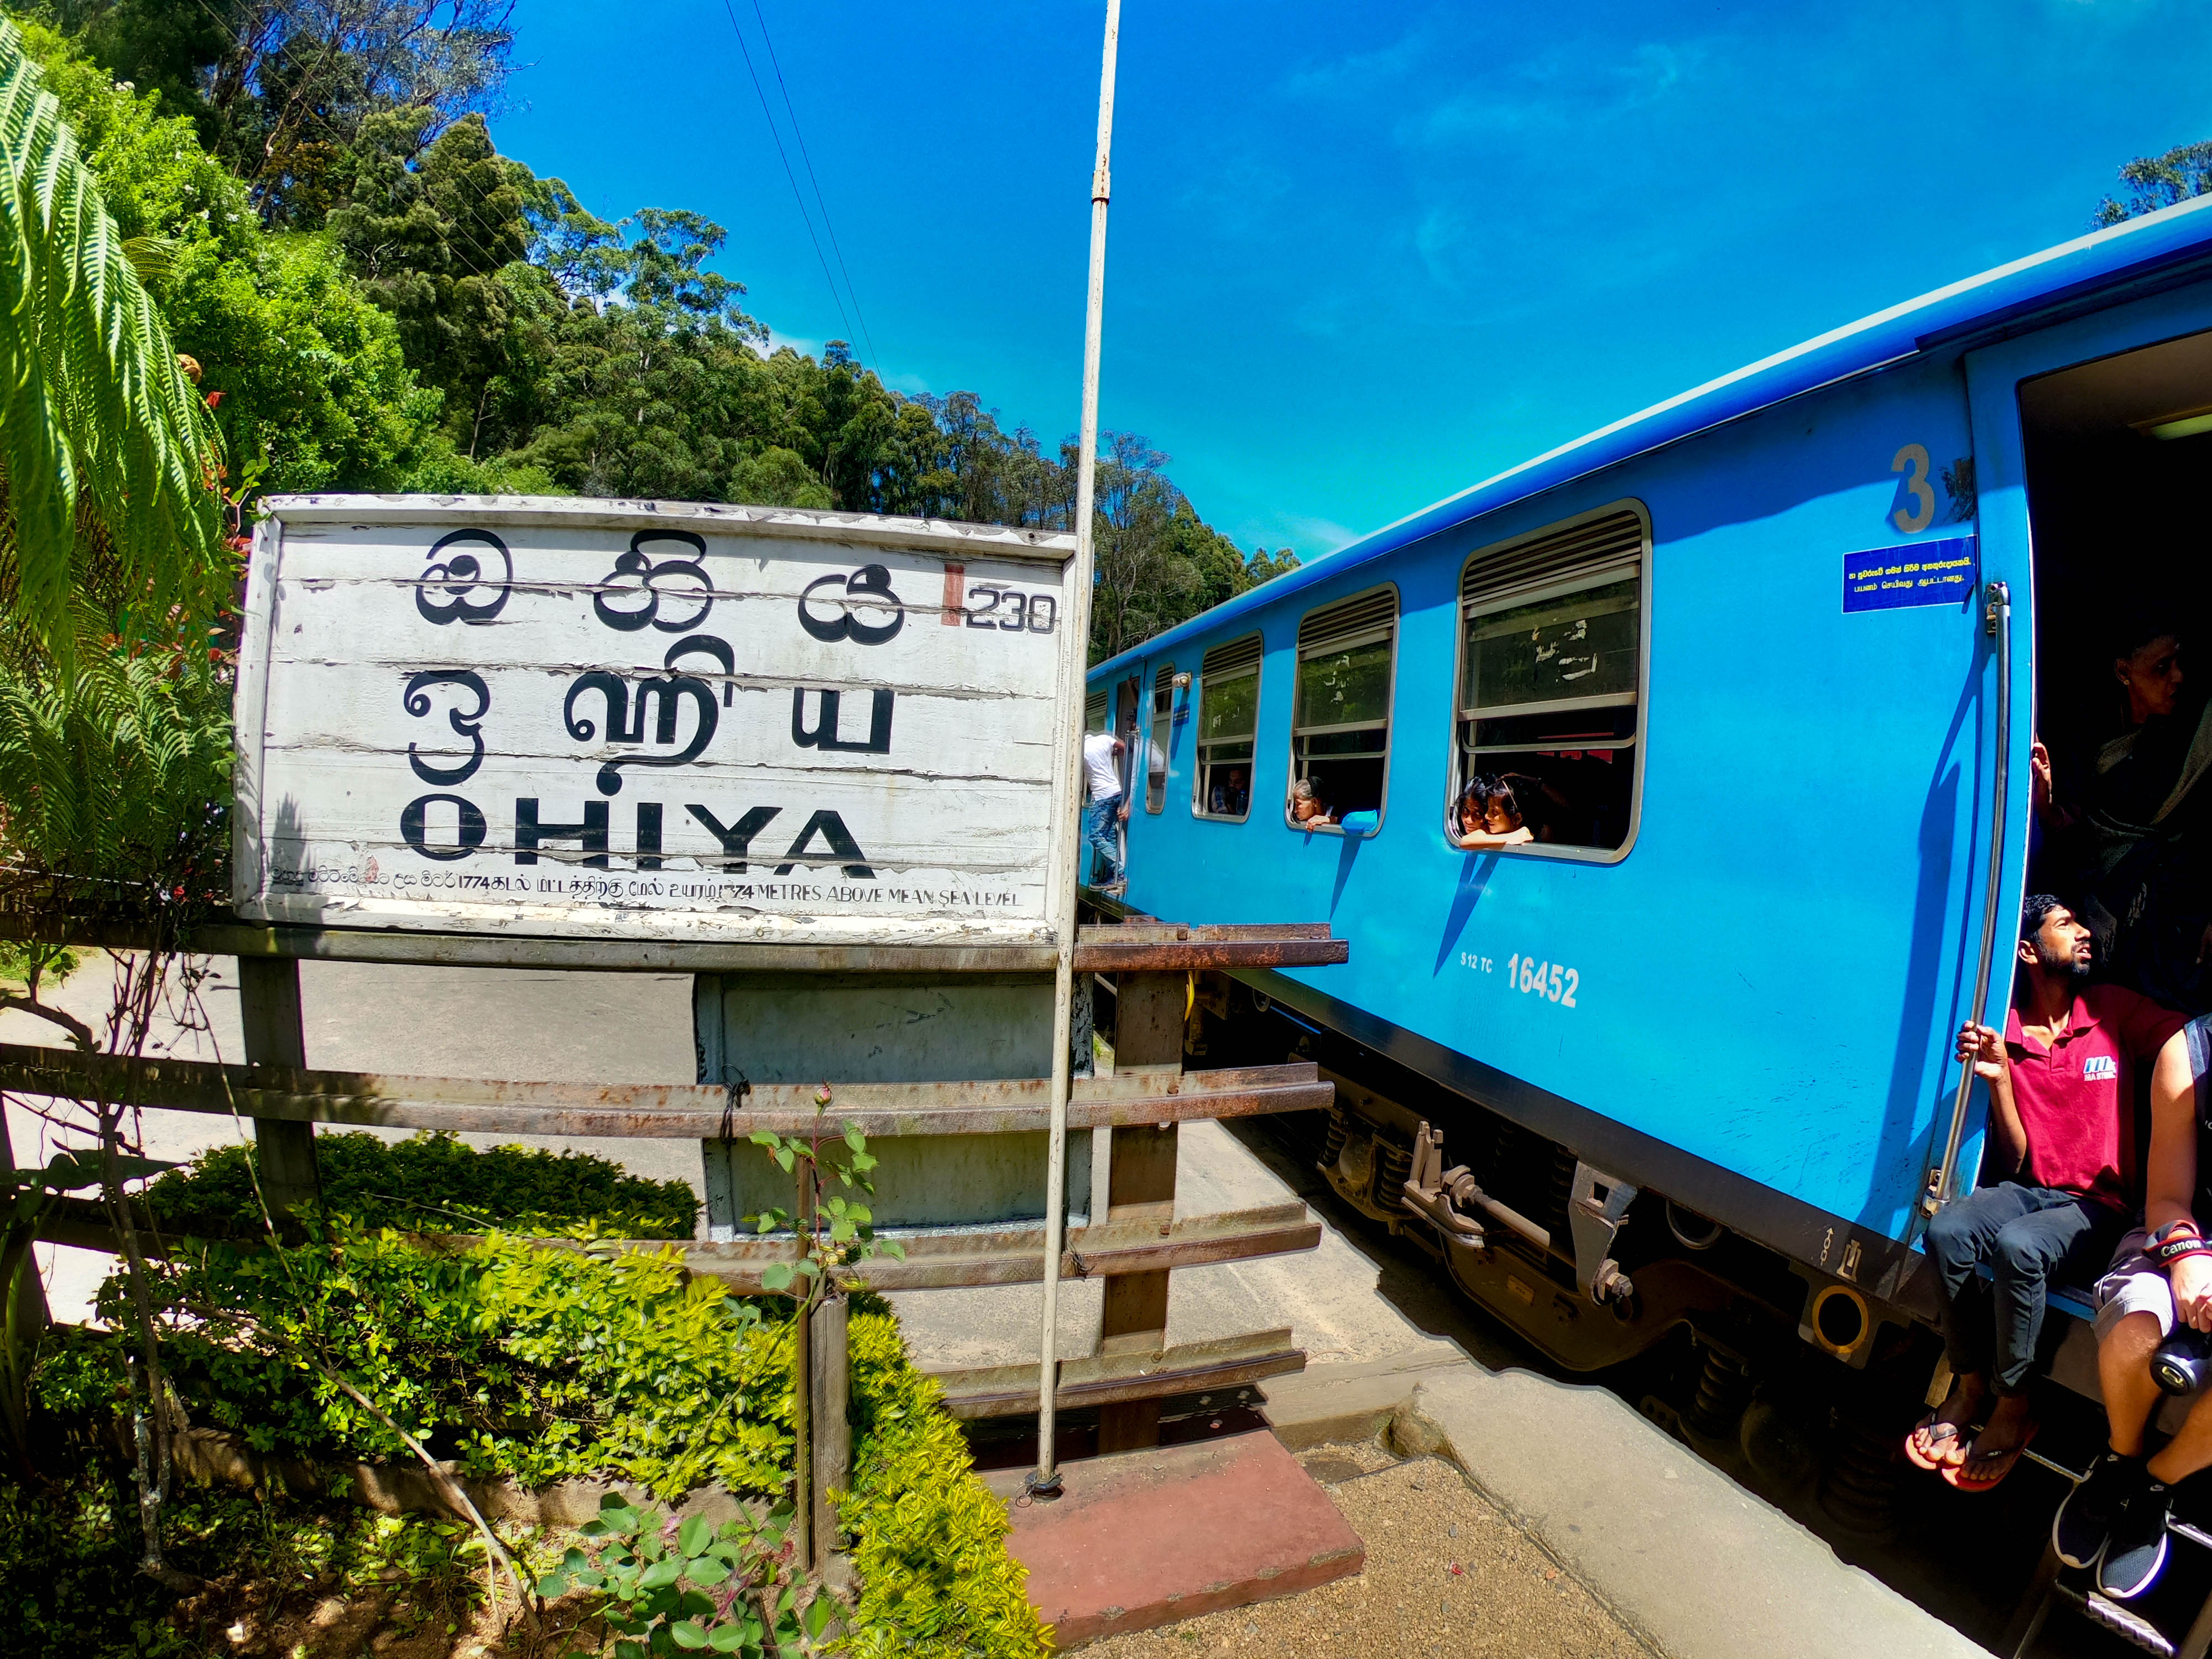 The train journey from Ohiya to Idalgashina